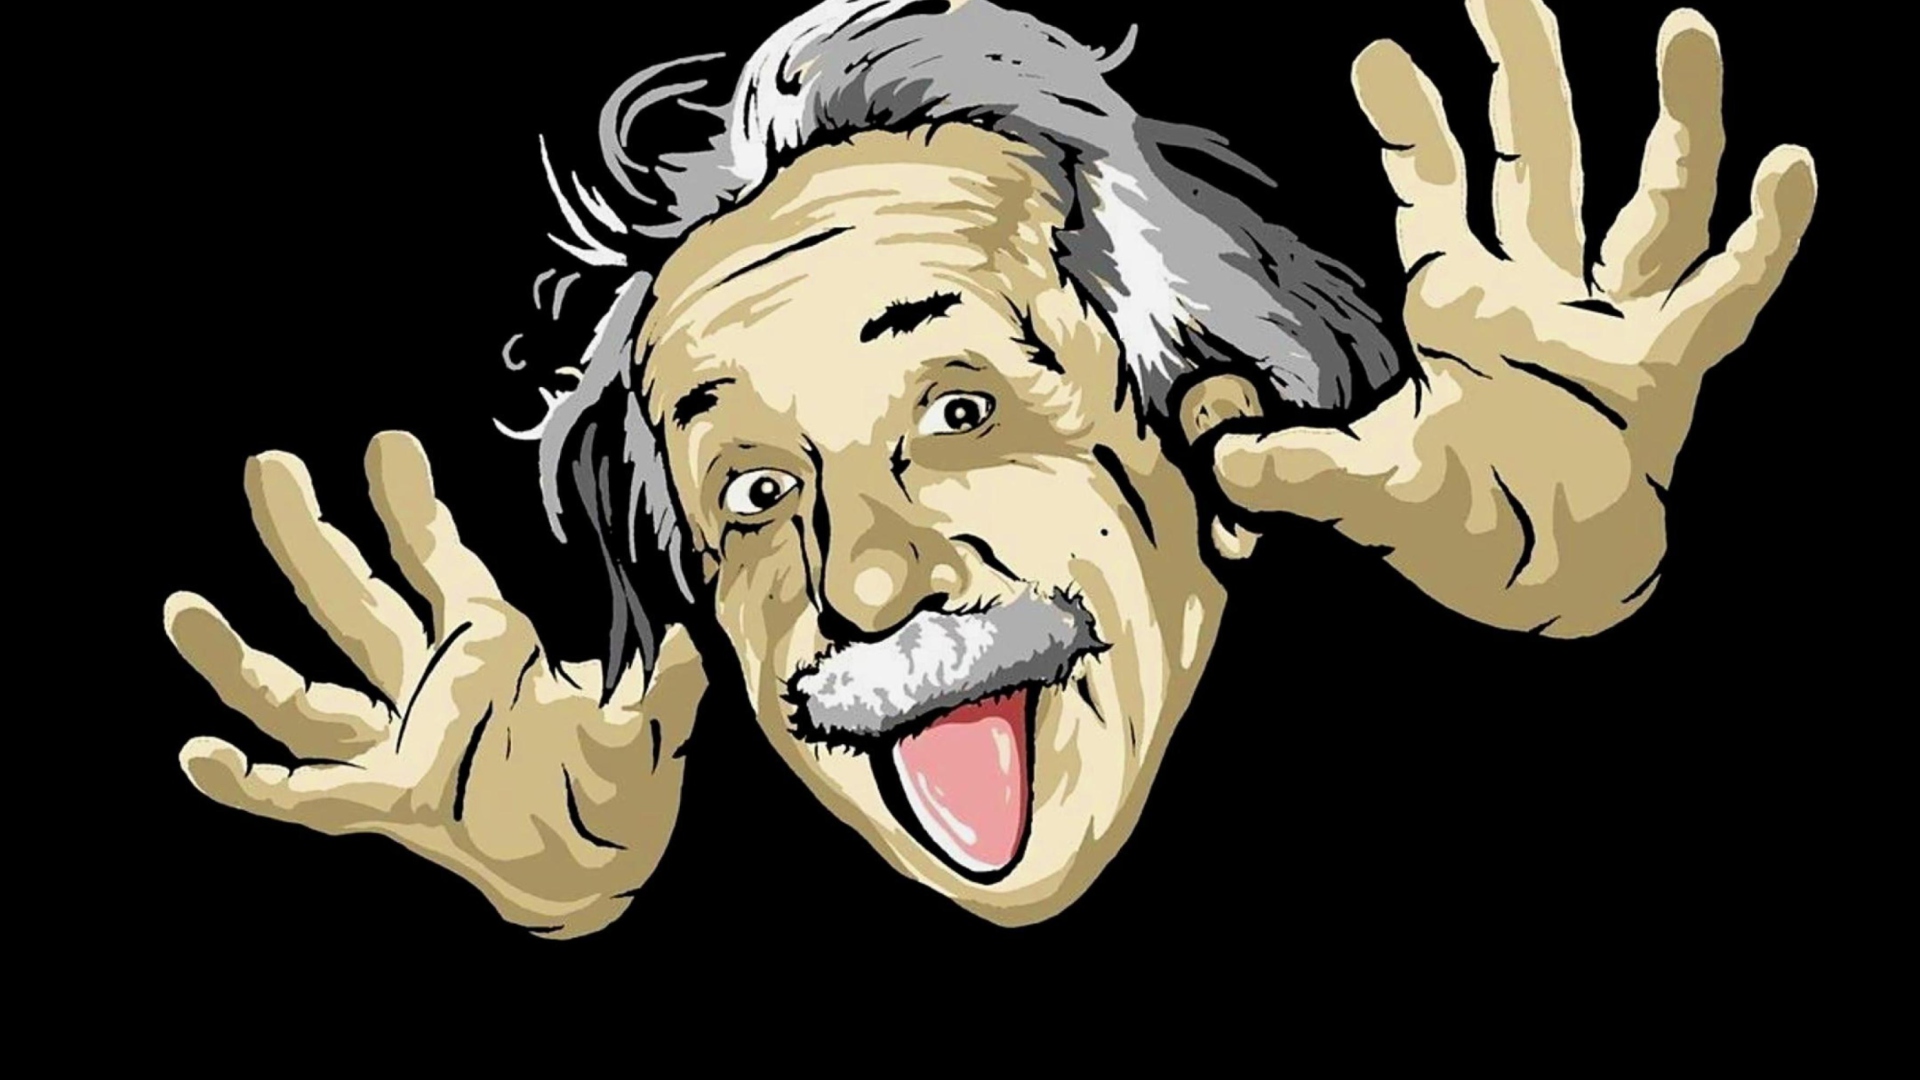 Funny Albert Einstein Wallpaper For Desktop 1920x1080 Full Hd